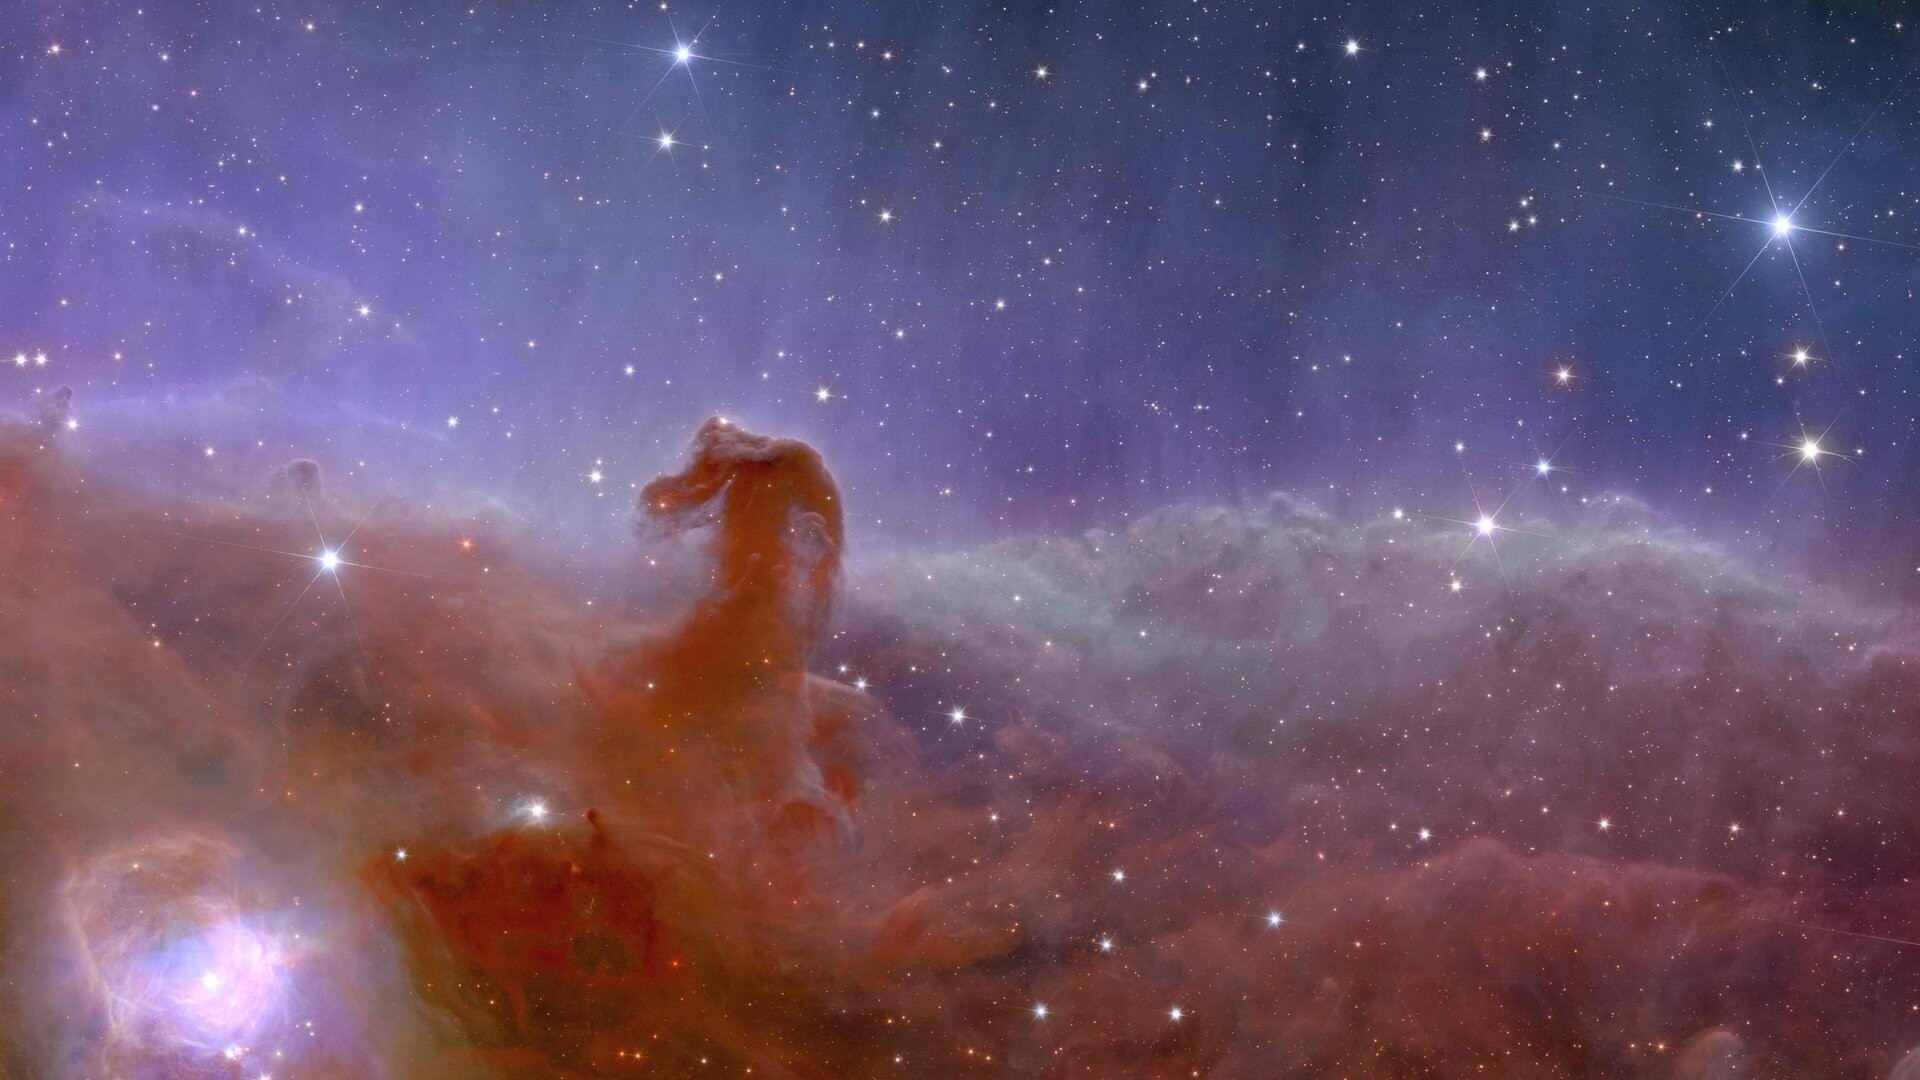 euclid-s-view-of-the-horsehead-nebula-pillars.jpg